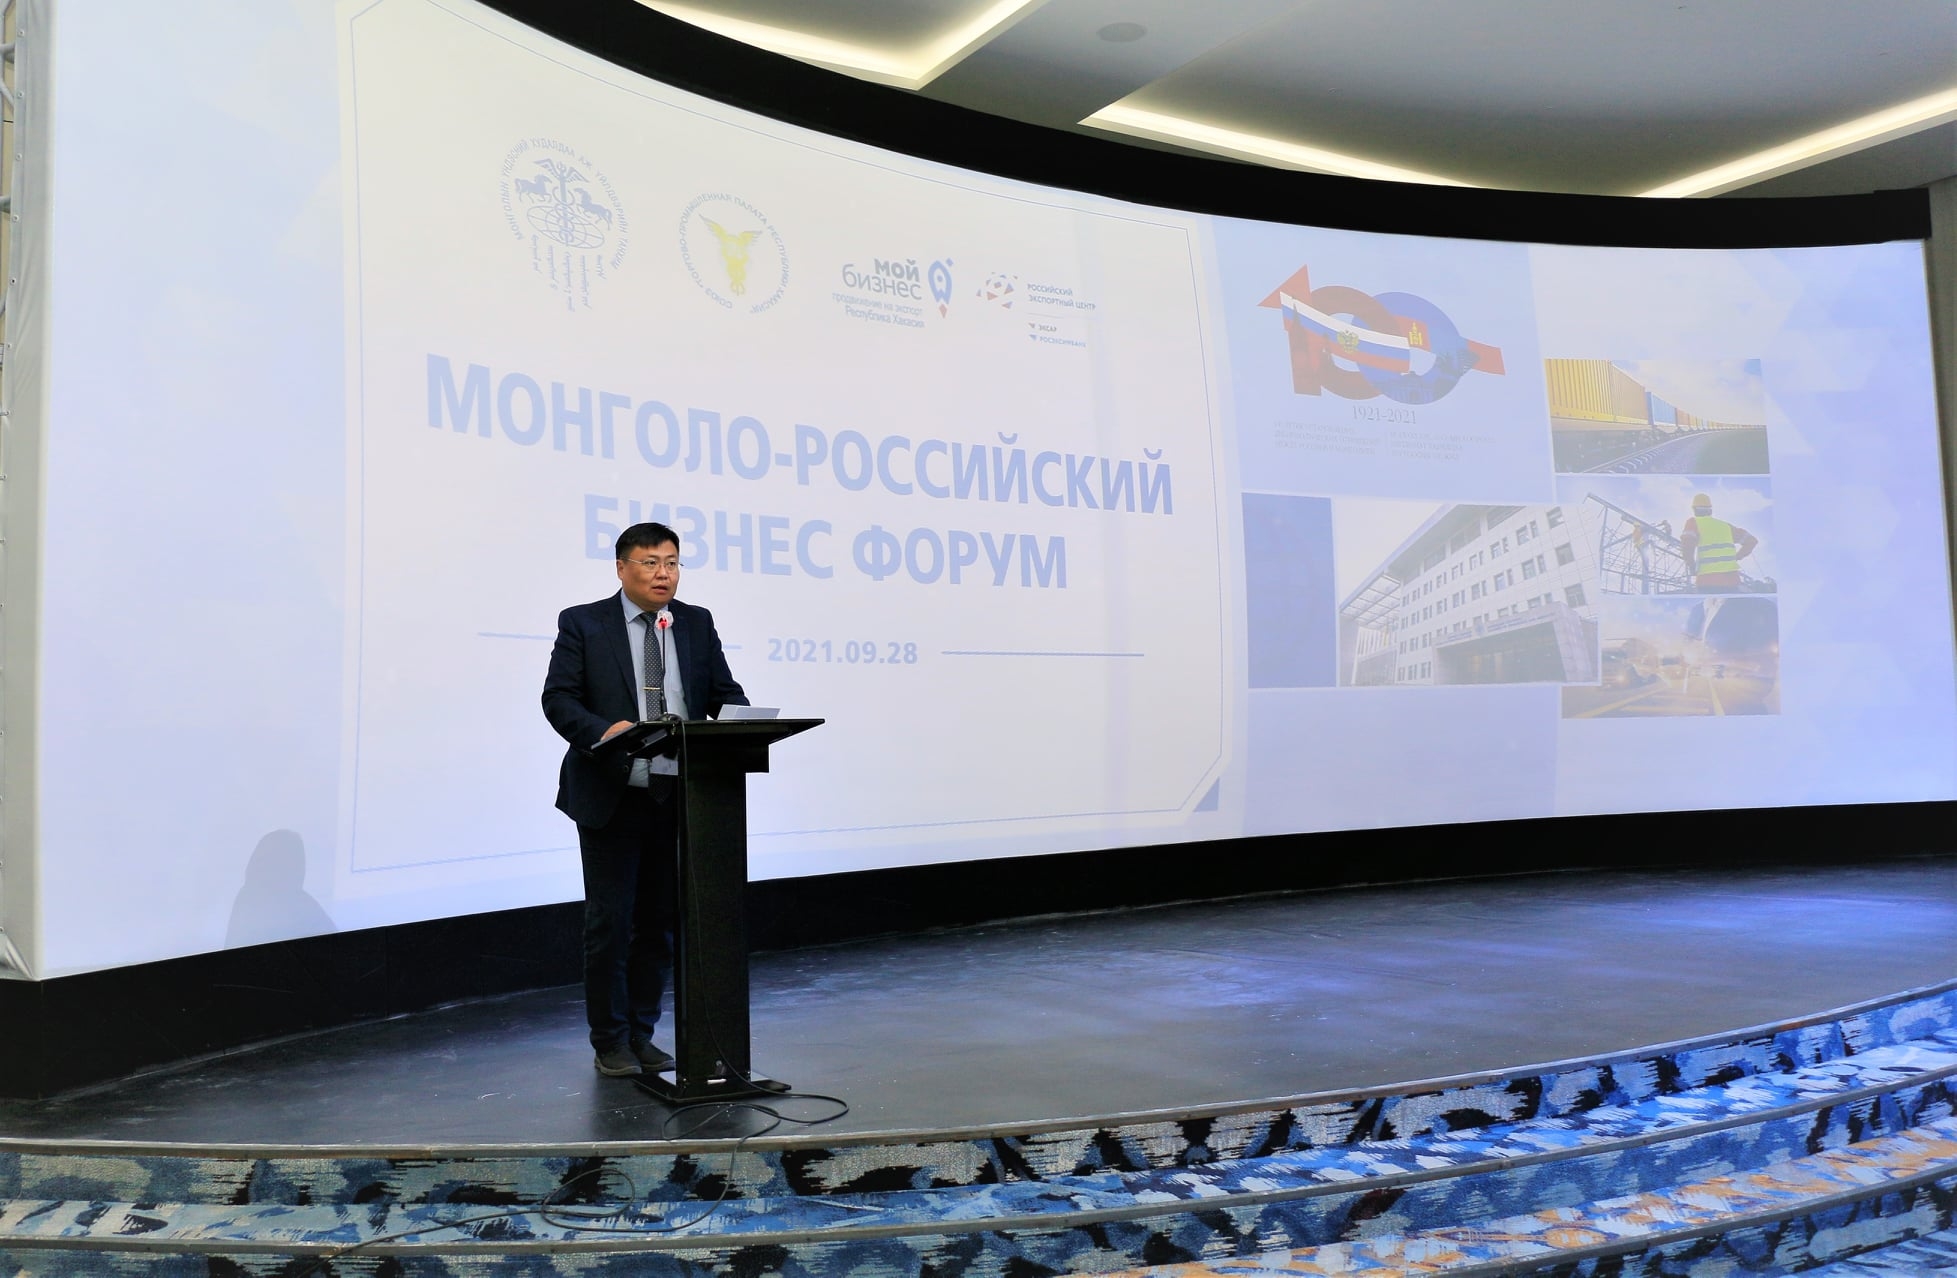 Mongolian-Russian construction and transportation business forum